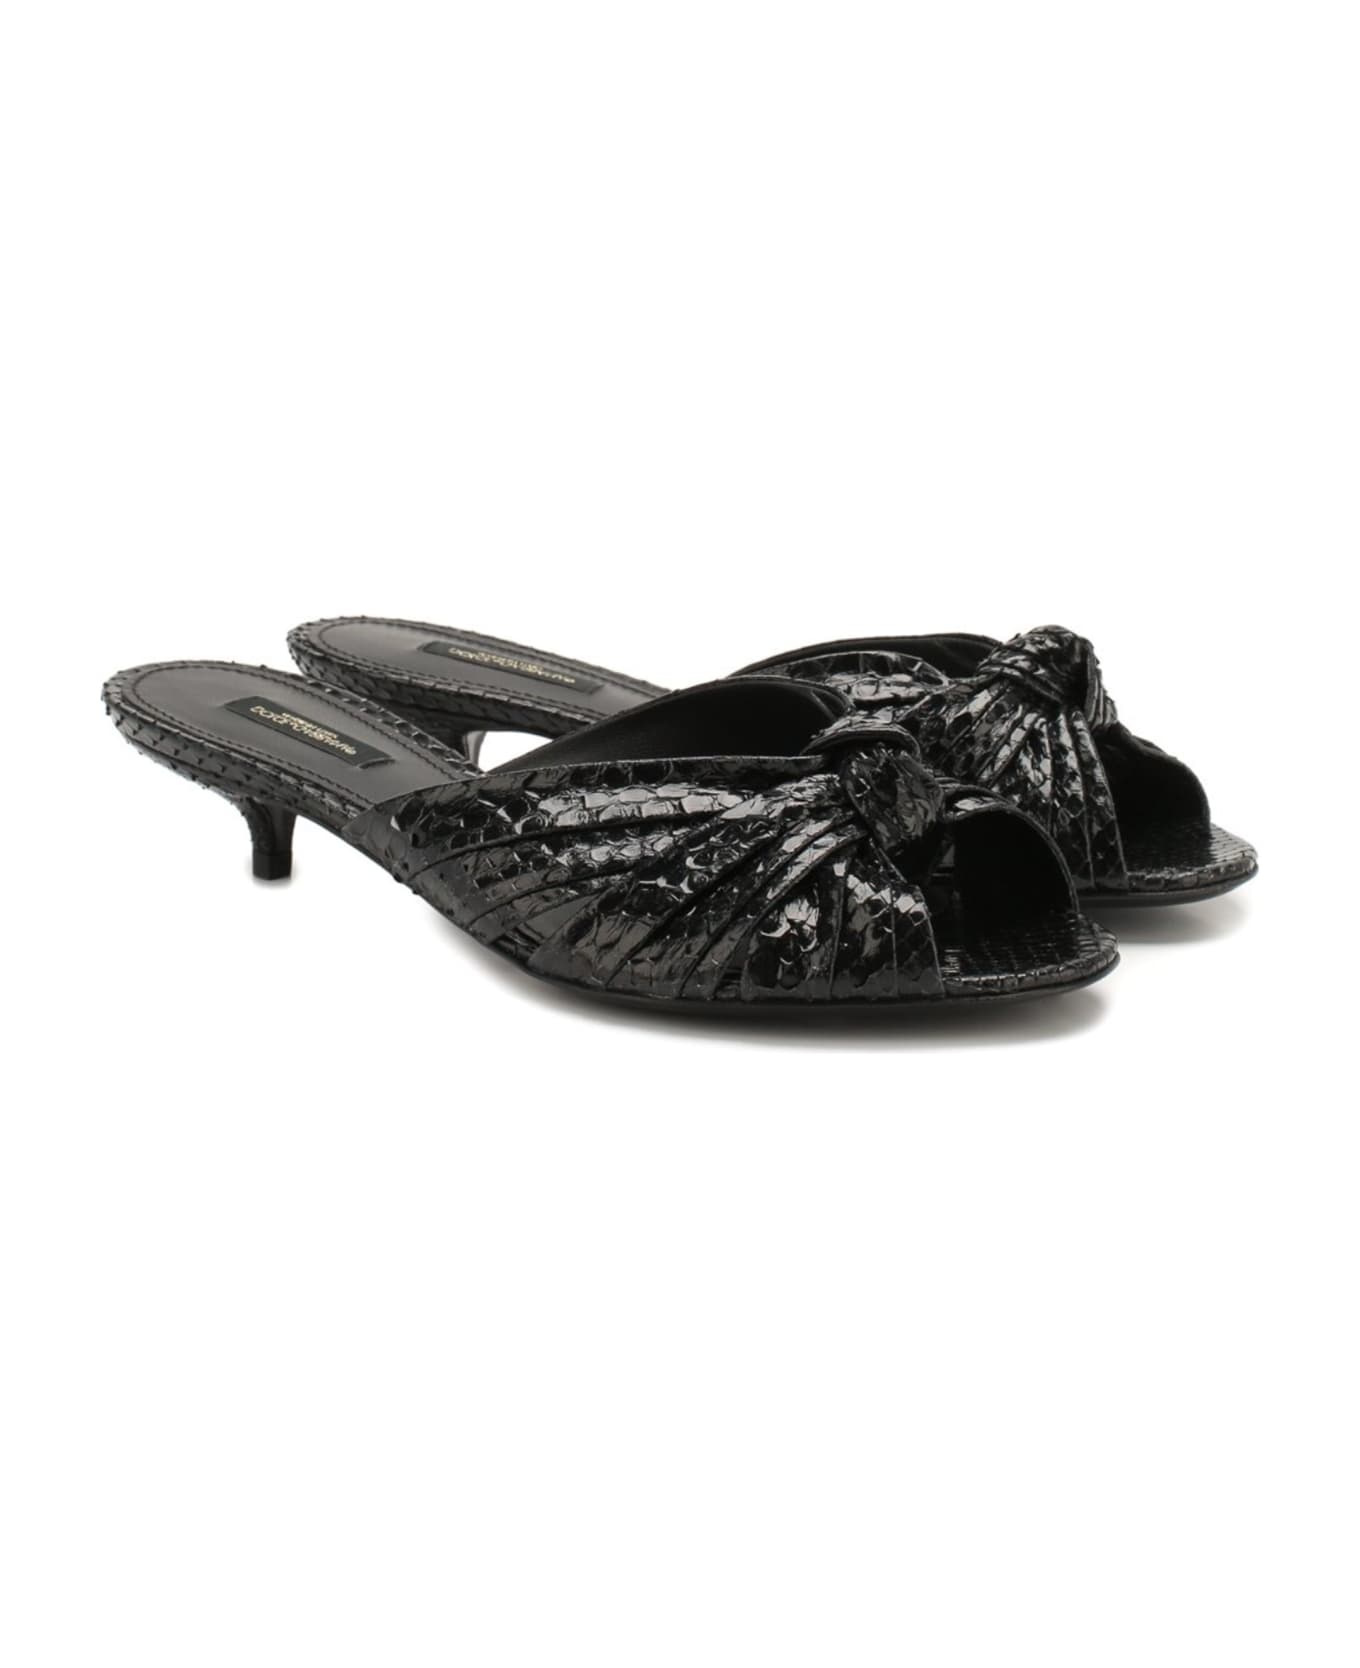 Dolce & Gabbana Python Leather Mules - Black